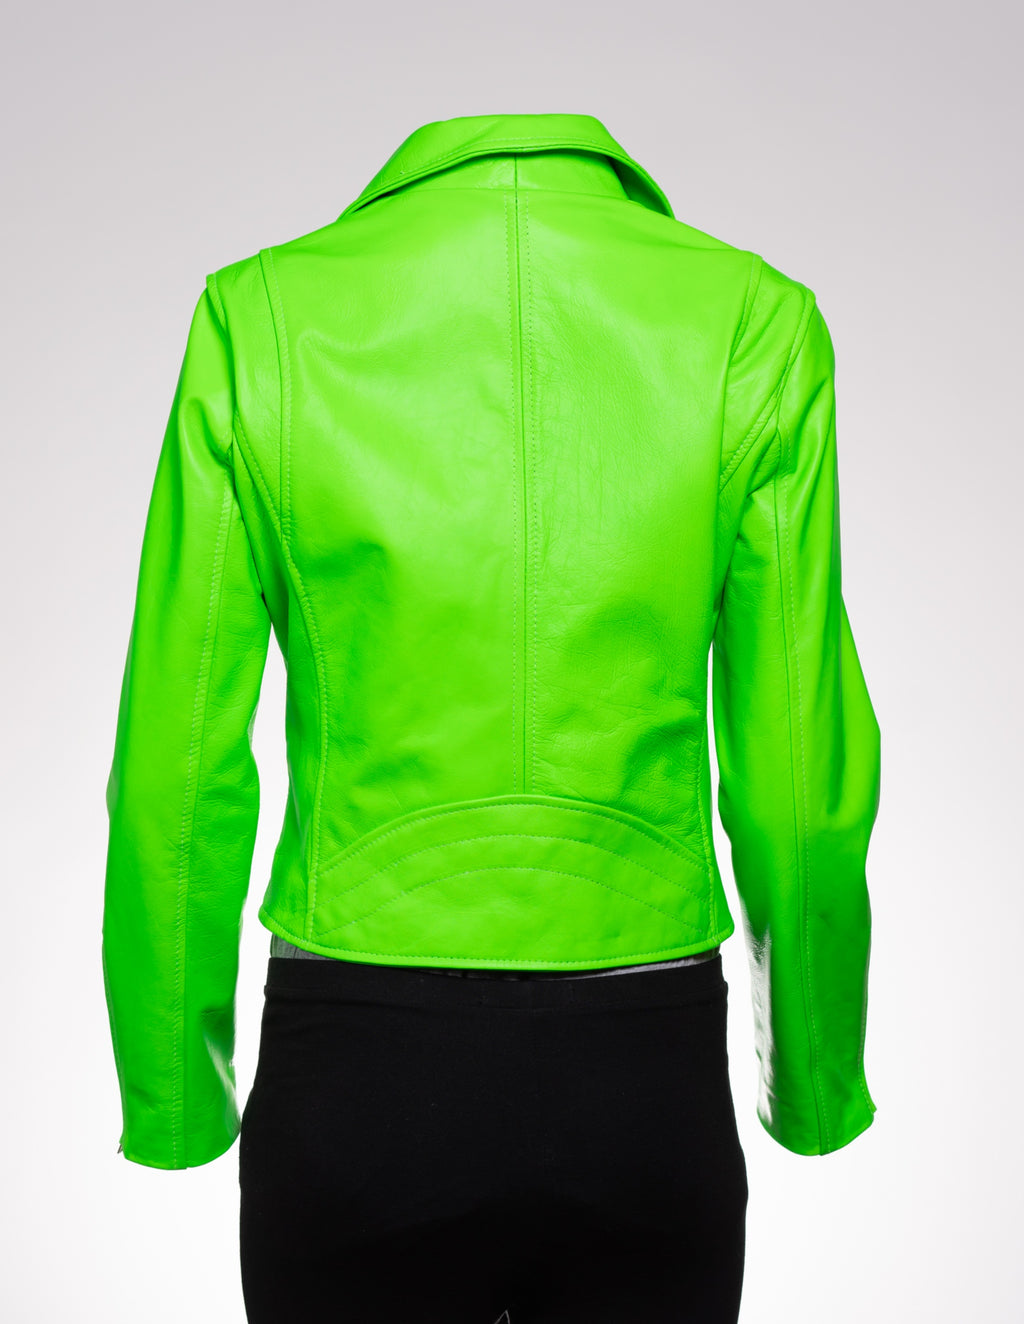 Ladies Fluorescent Green Leather Biker Jacket - Caroline